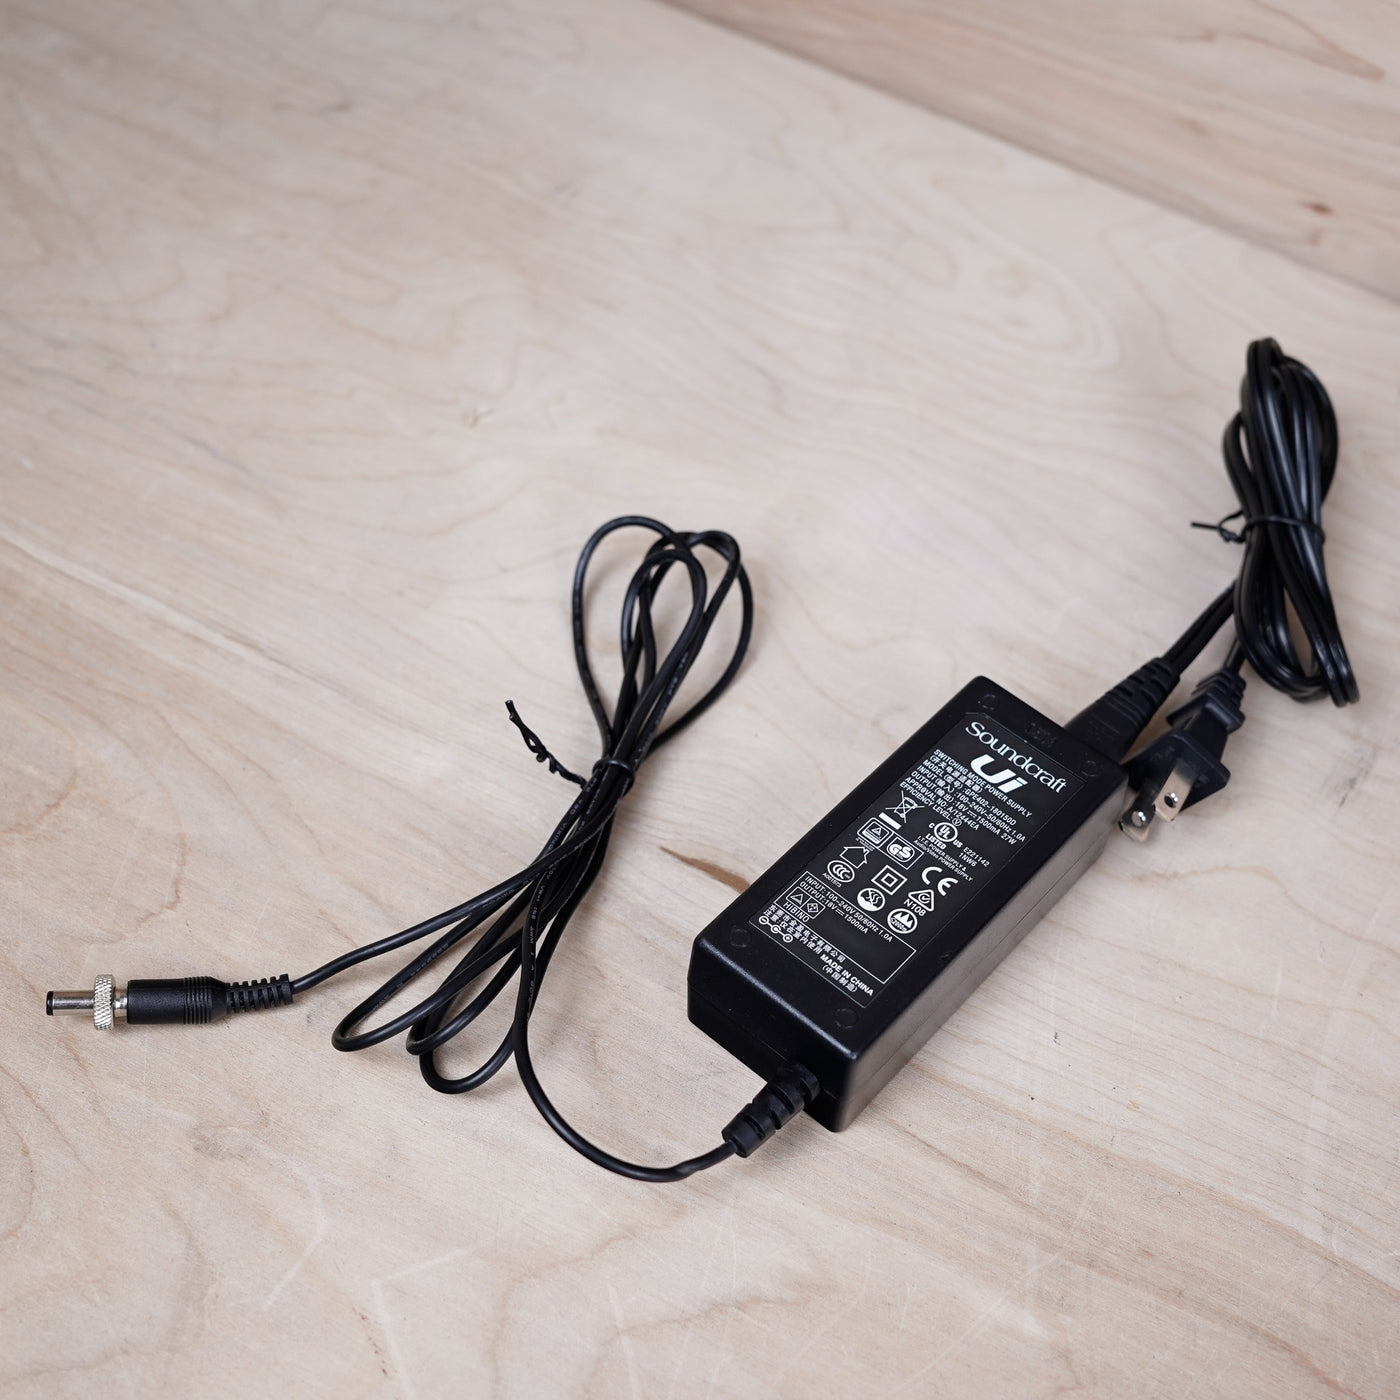 Soundcraft Ui-16 Rackmount 16-Channel Digital Mixer w/ WiFi Router